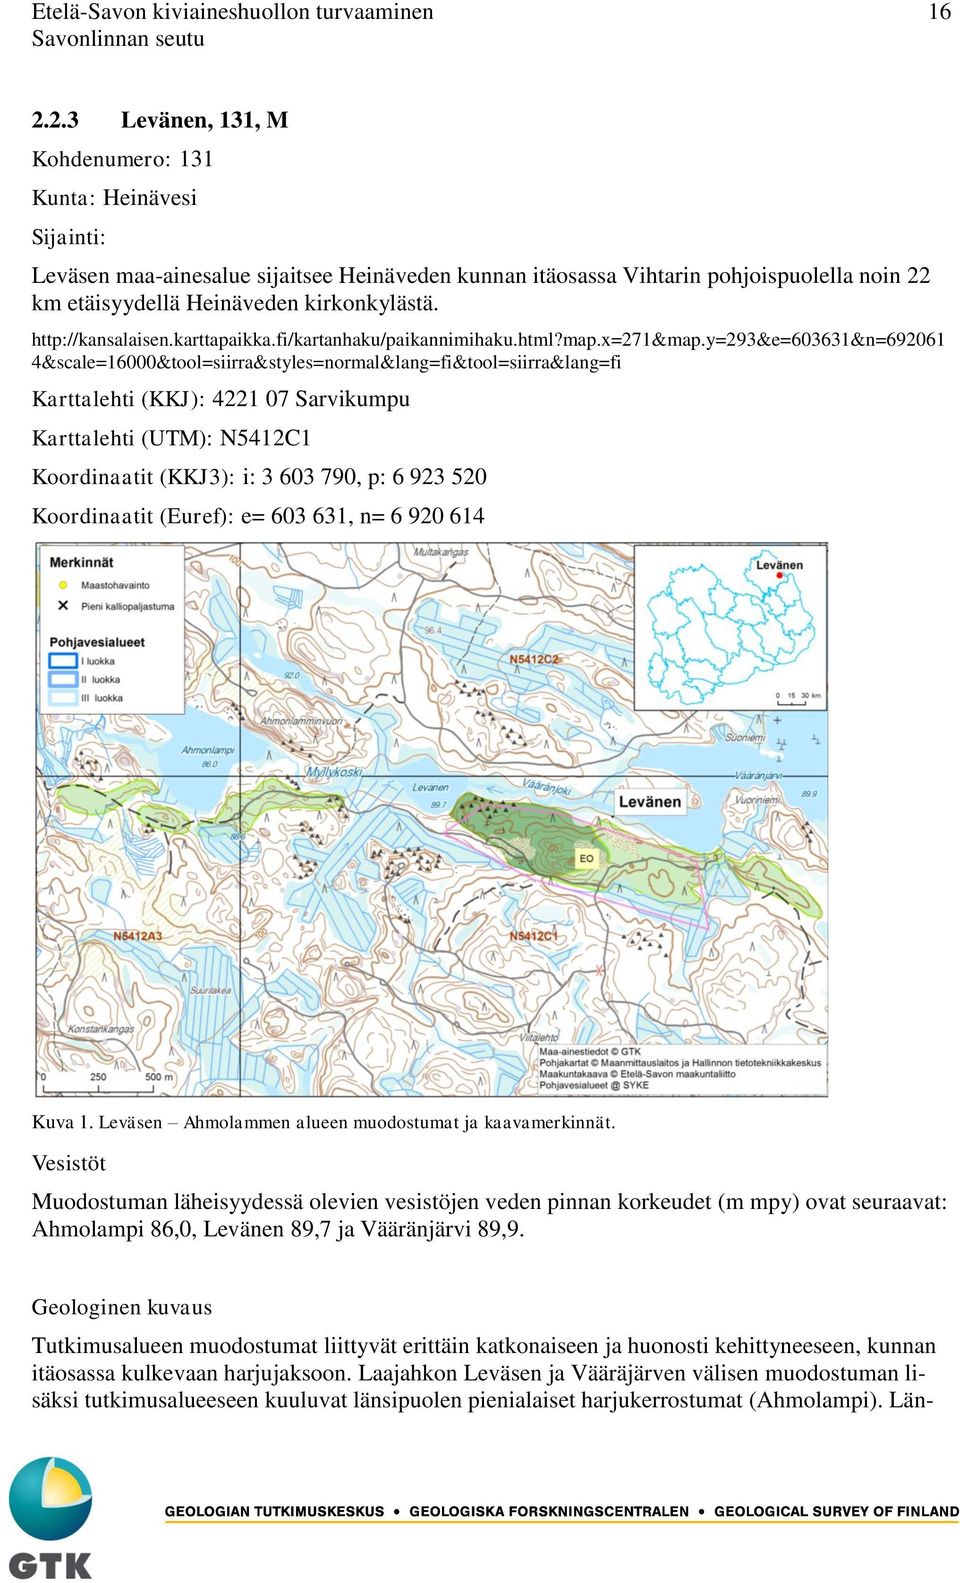 http://kansalaisen.karttapaikka.fi/kartanhaku/paikannimihaku.html?map.x=271&map.